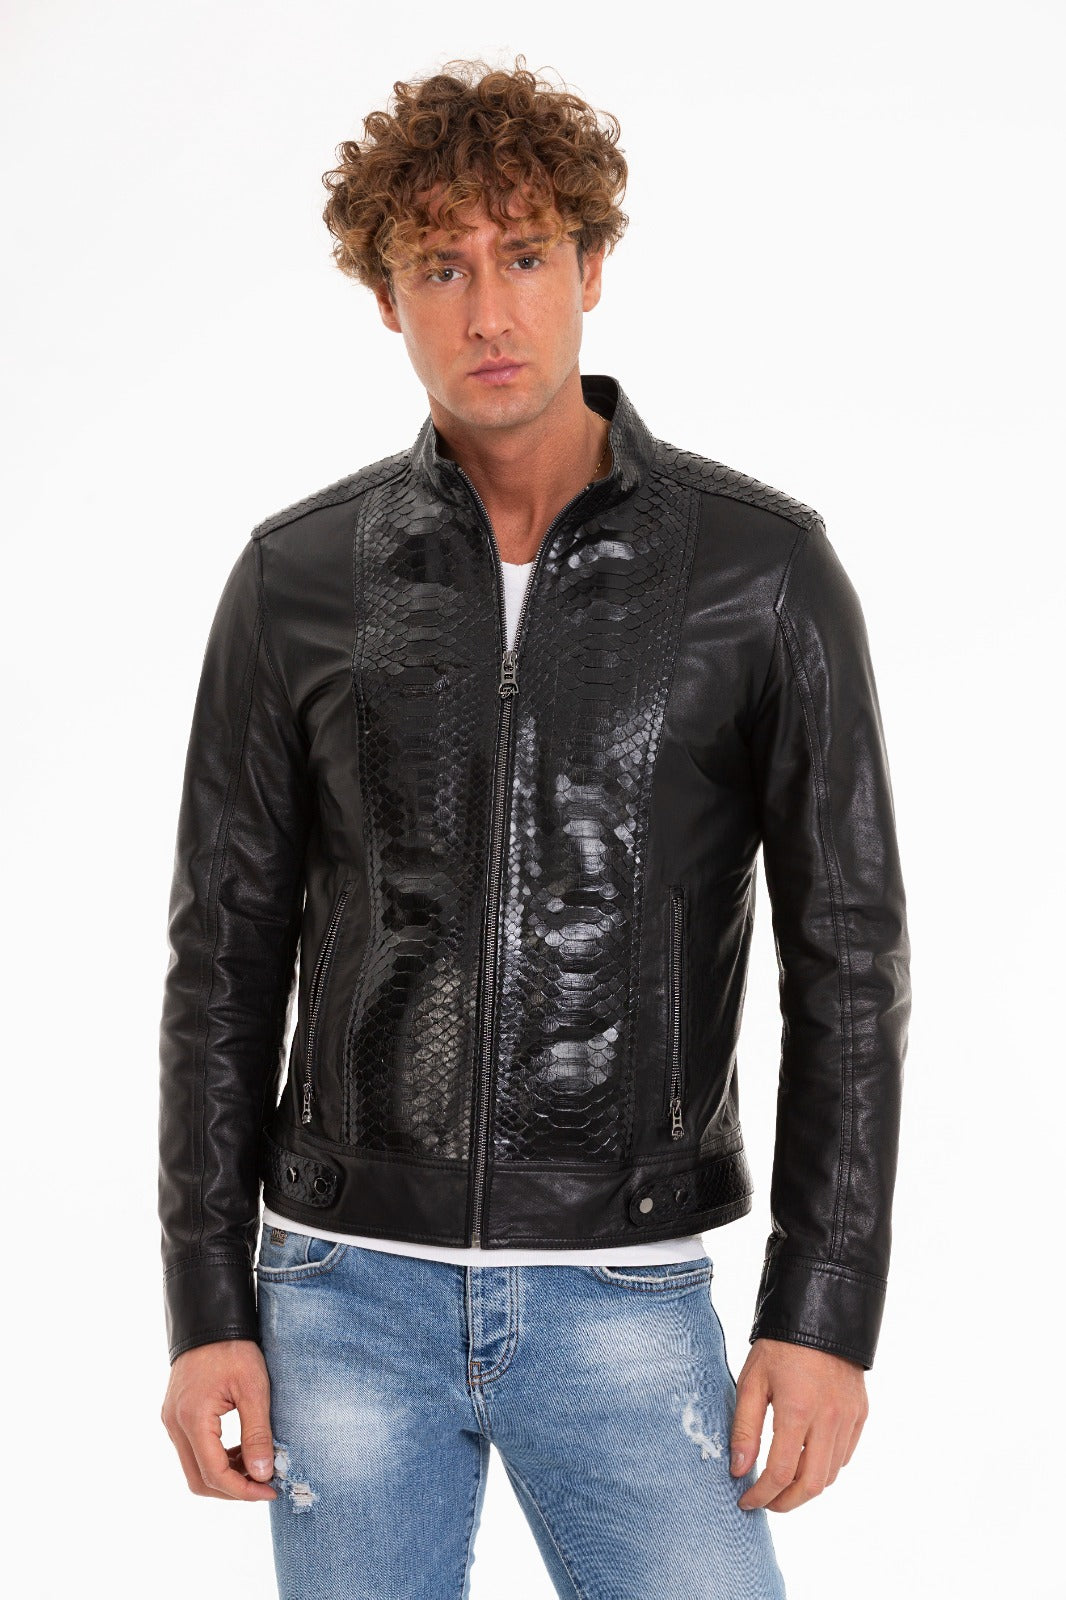 The Solvito Pythn Black Leather Men Jacket